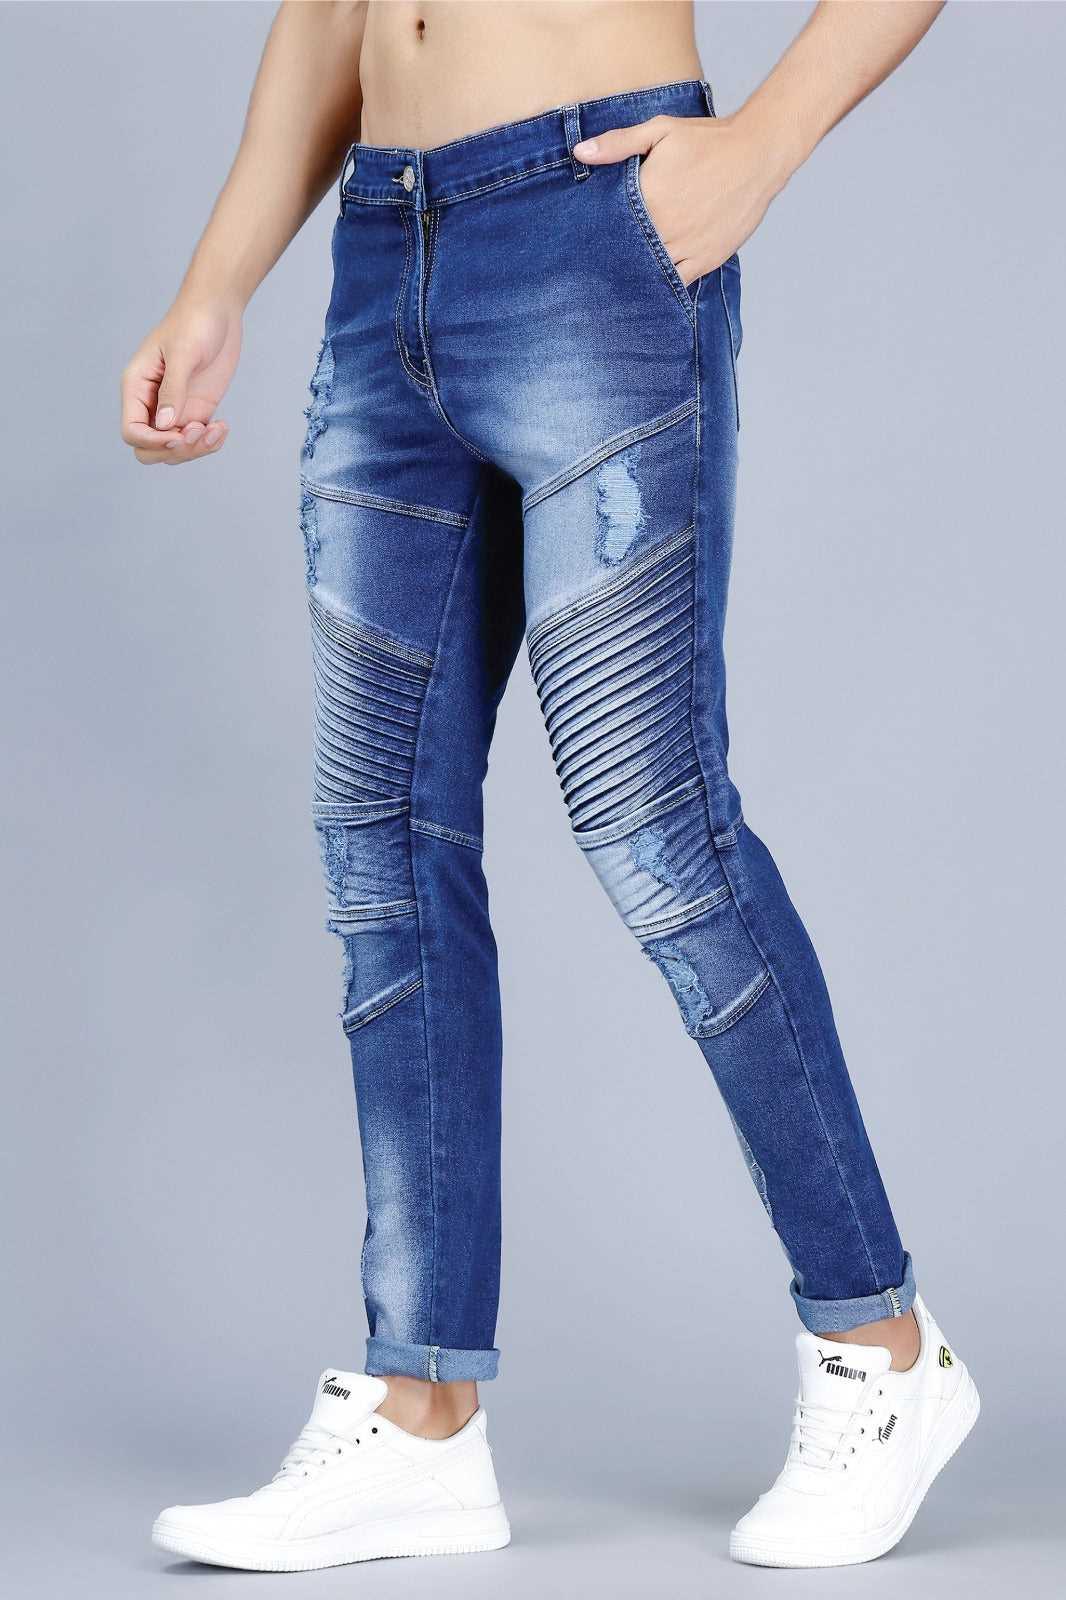 Men's Slim Fit Ankle Length Biker Denim Jeans With Rough Look - Peplos Jeans 